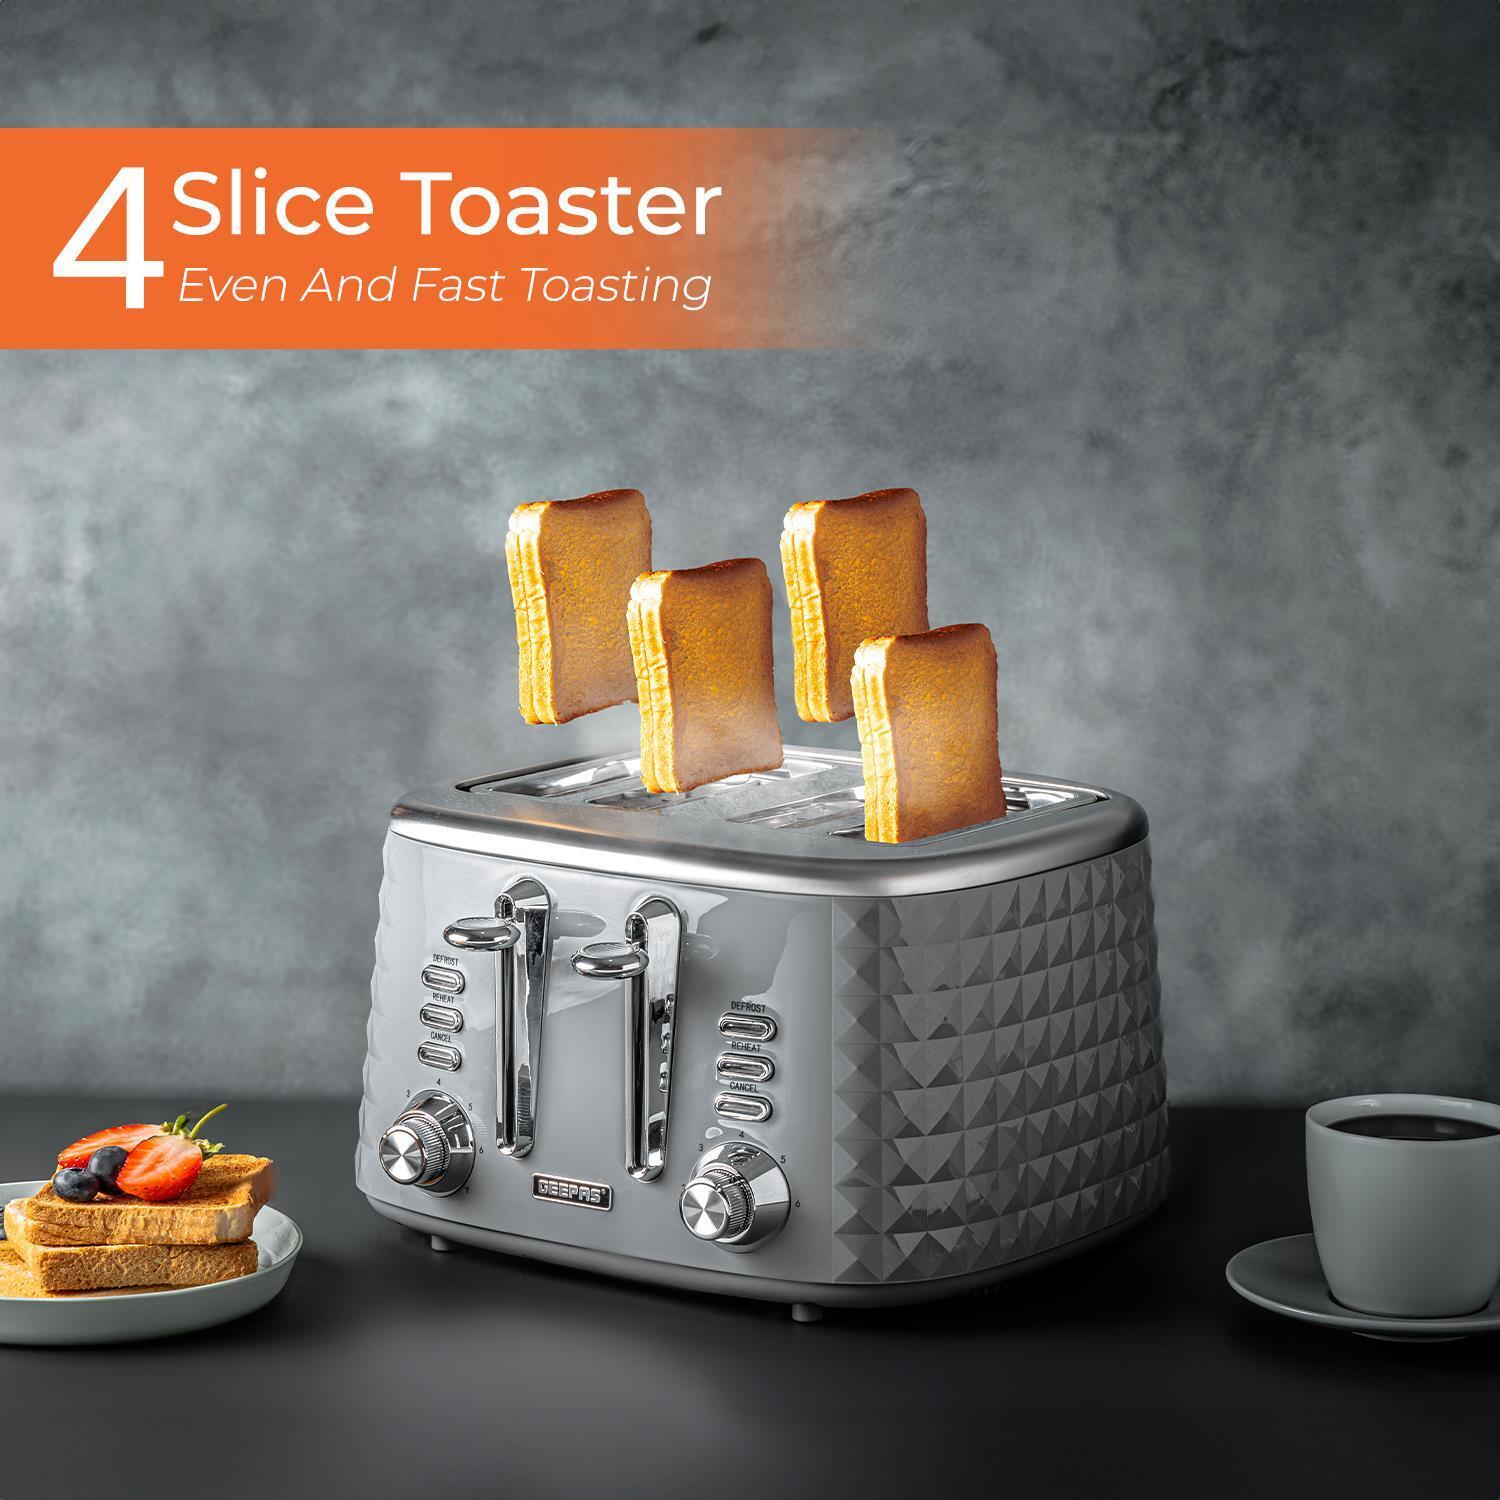 2200W Rapid Boil Kettle & 4-Slice Toaster Set In Grey